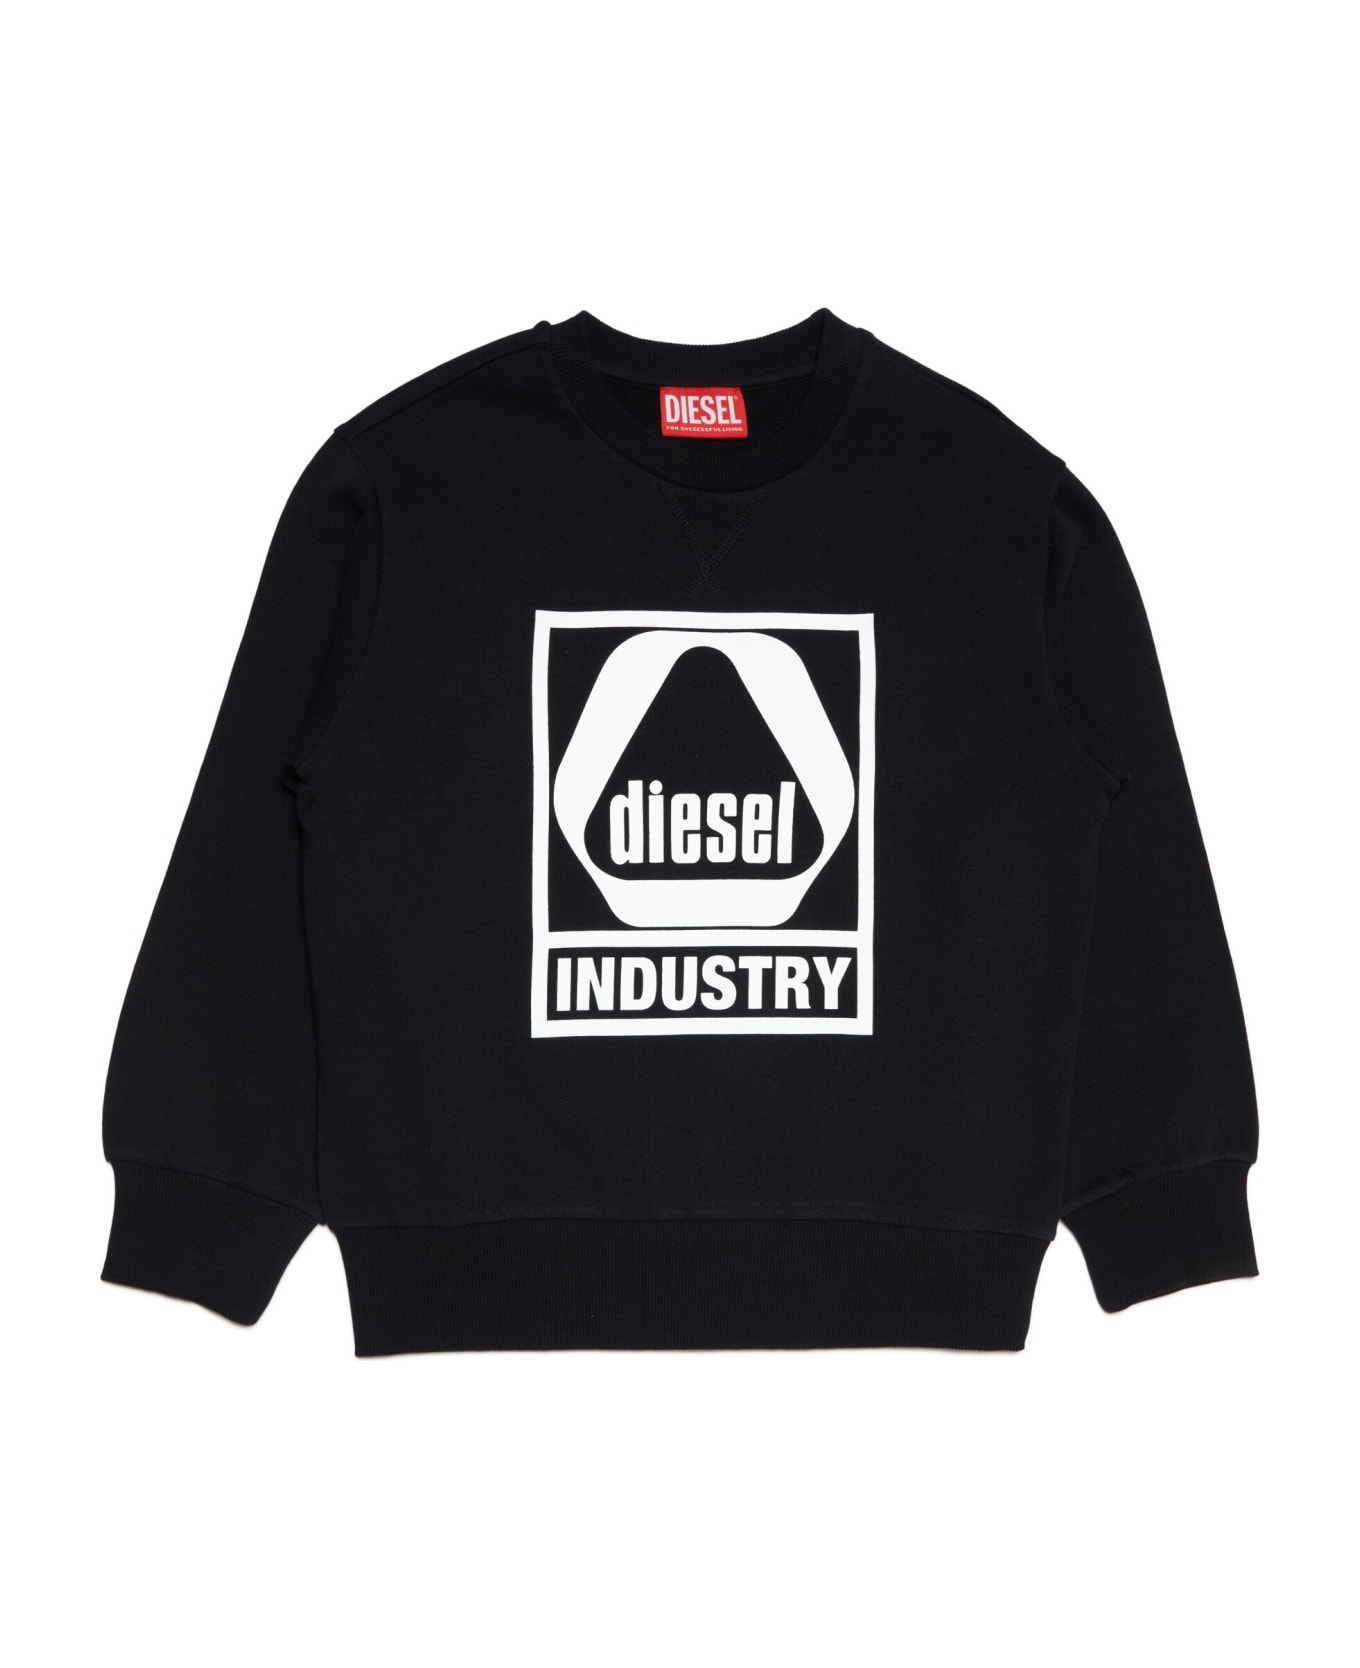 Diesel Sindu Over Sweat-shirt Diesel Crew-neck Sweatshirt With Utility Print